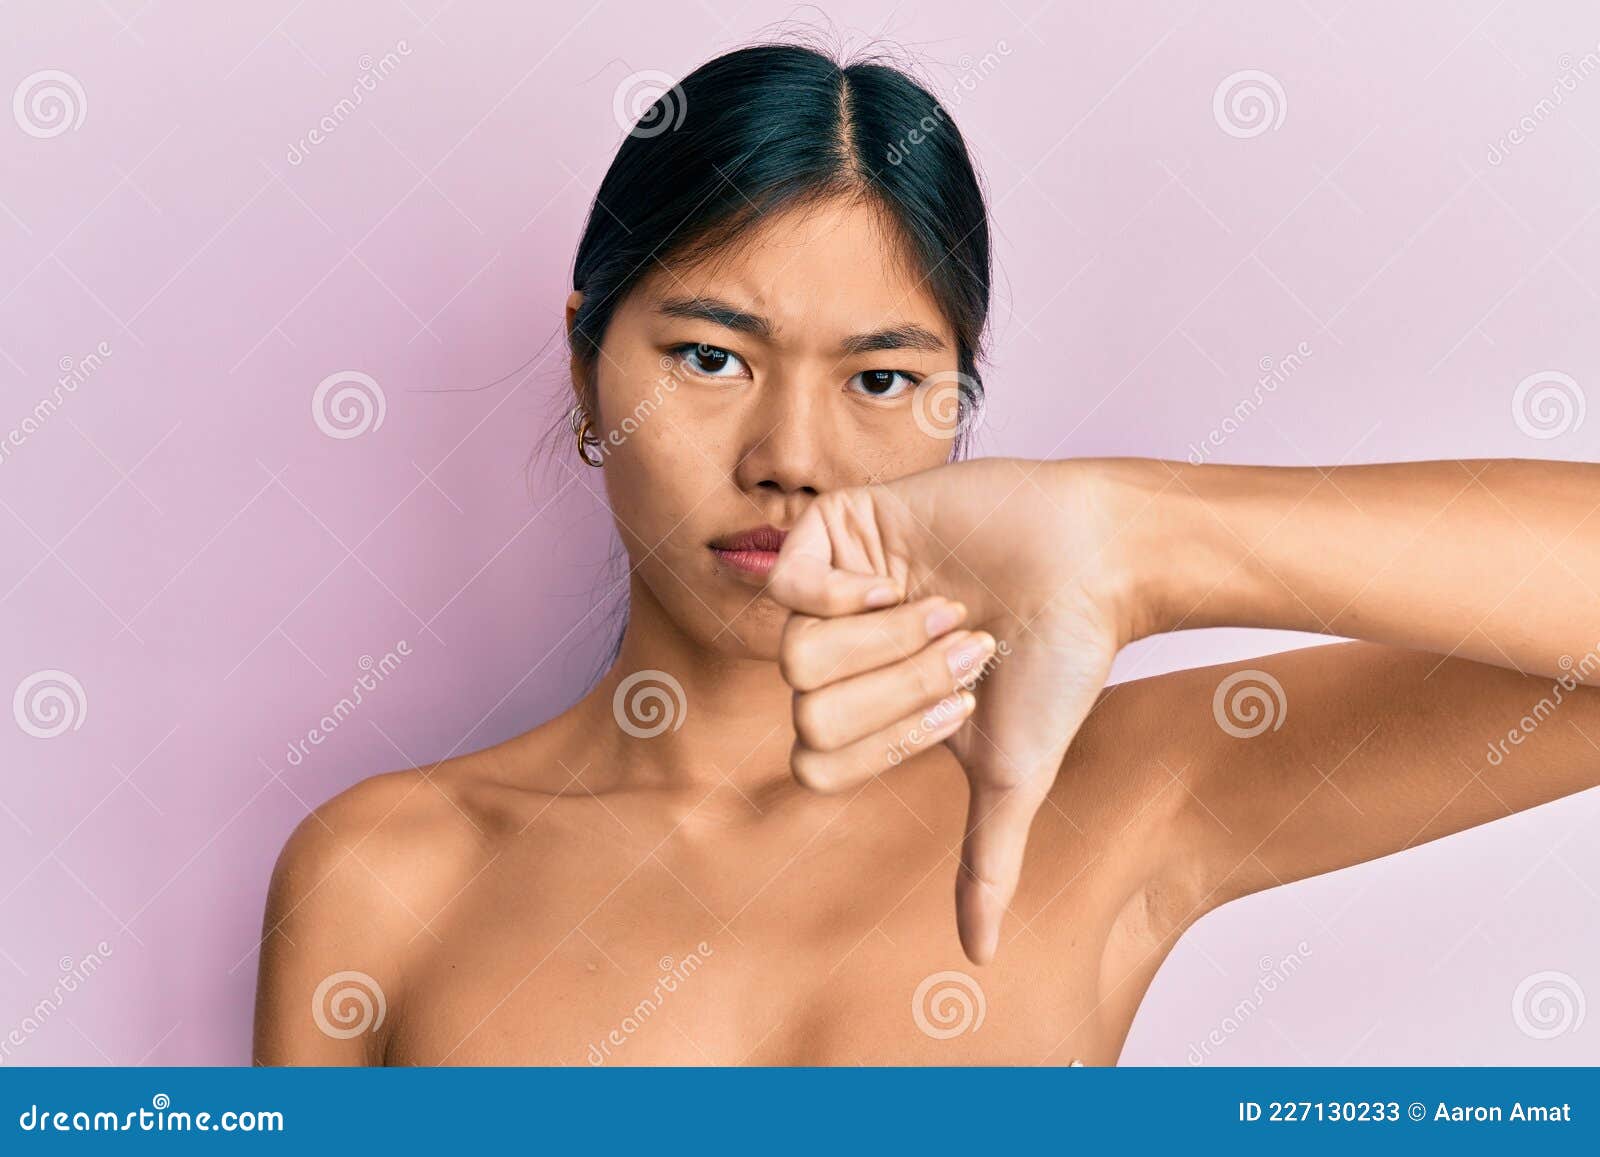 Naked Girls Thumbs